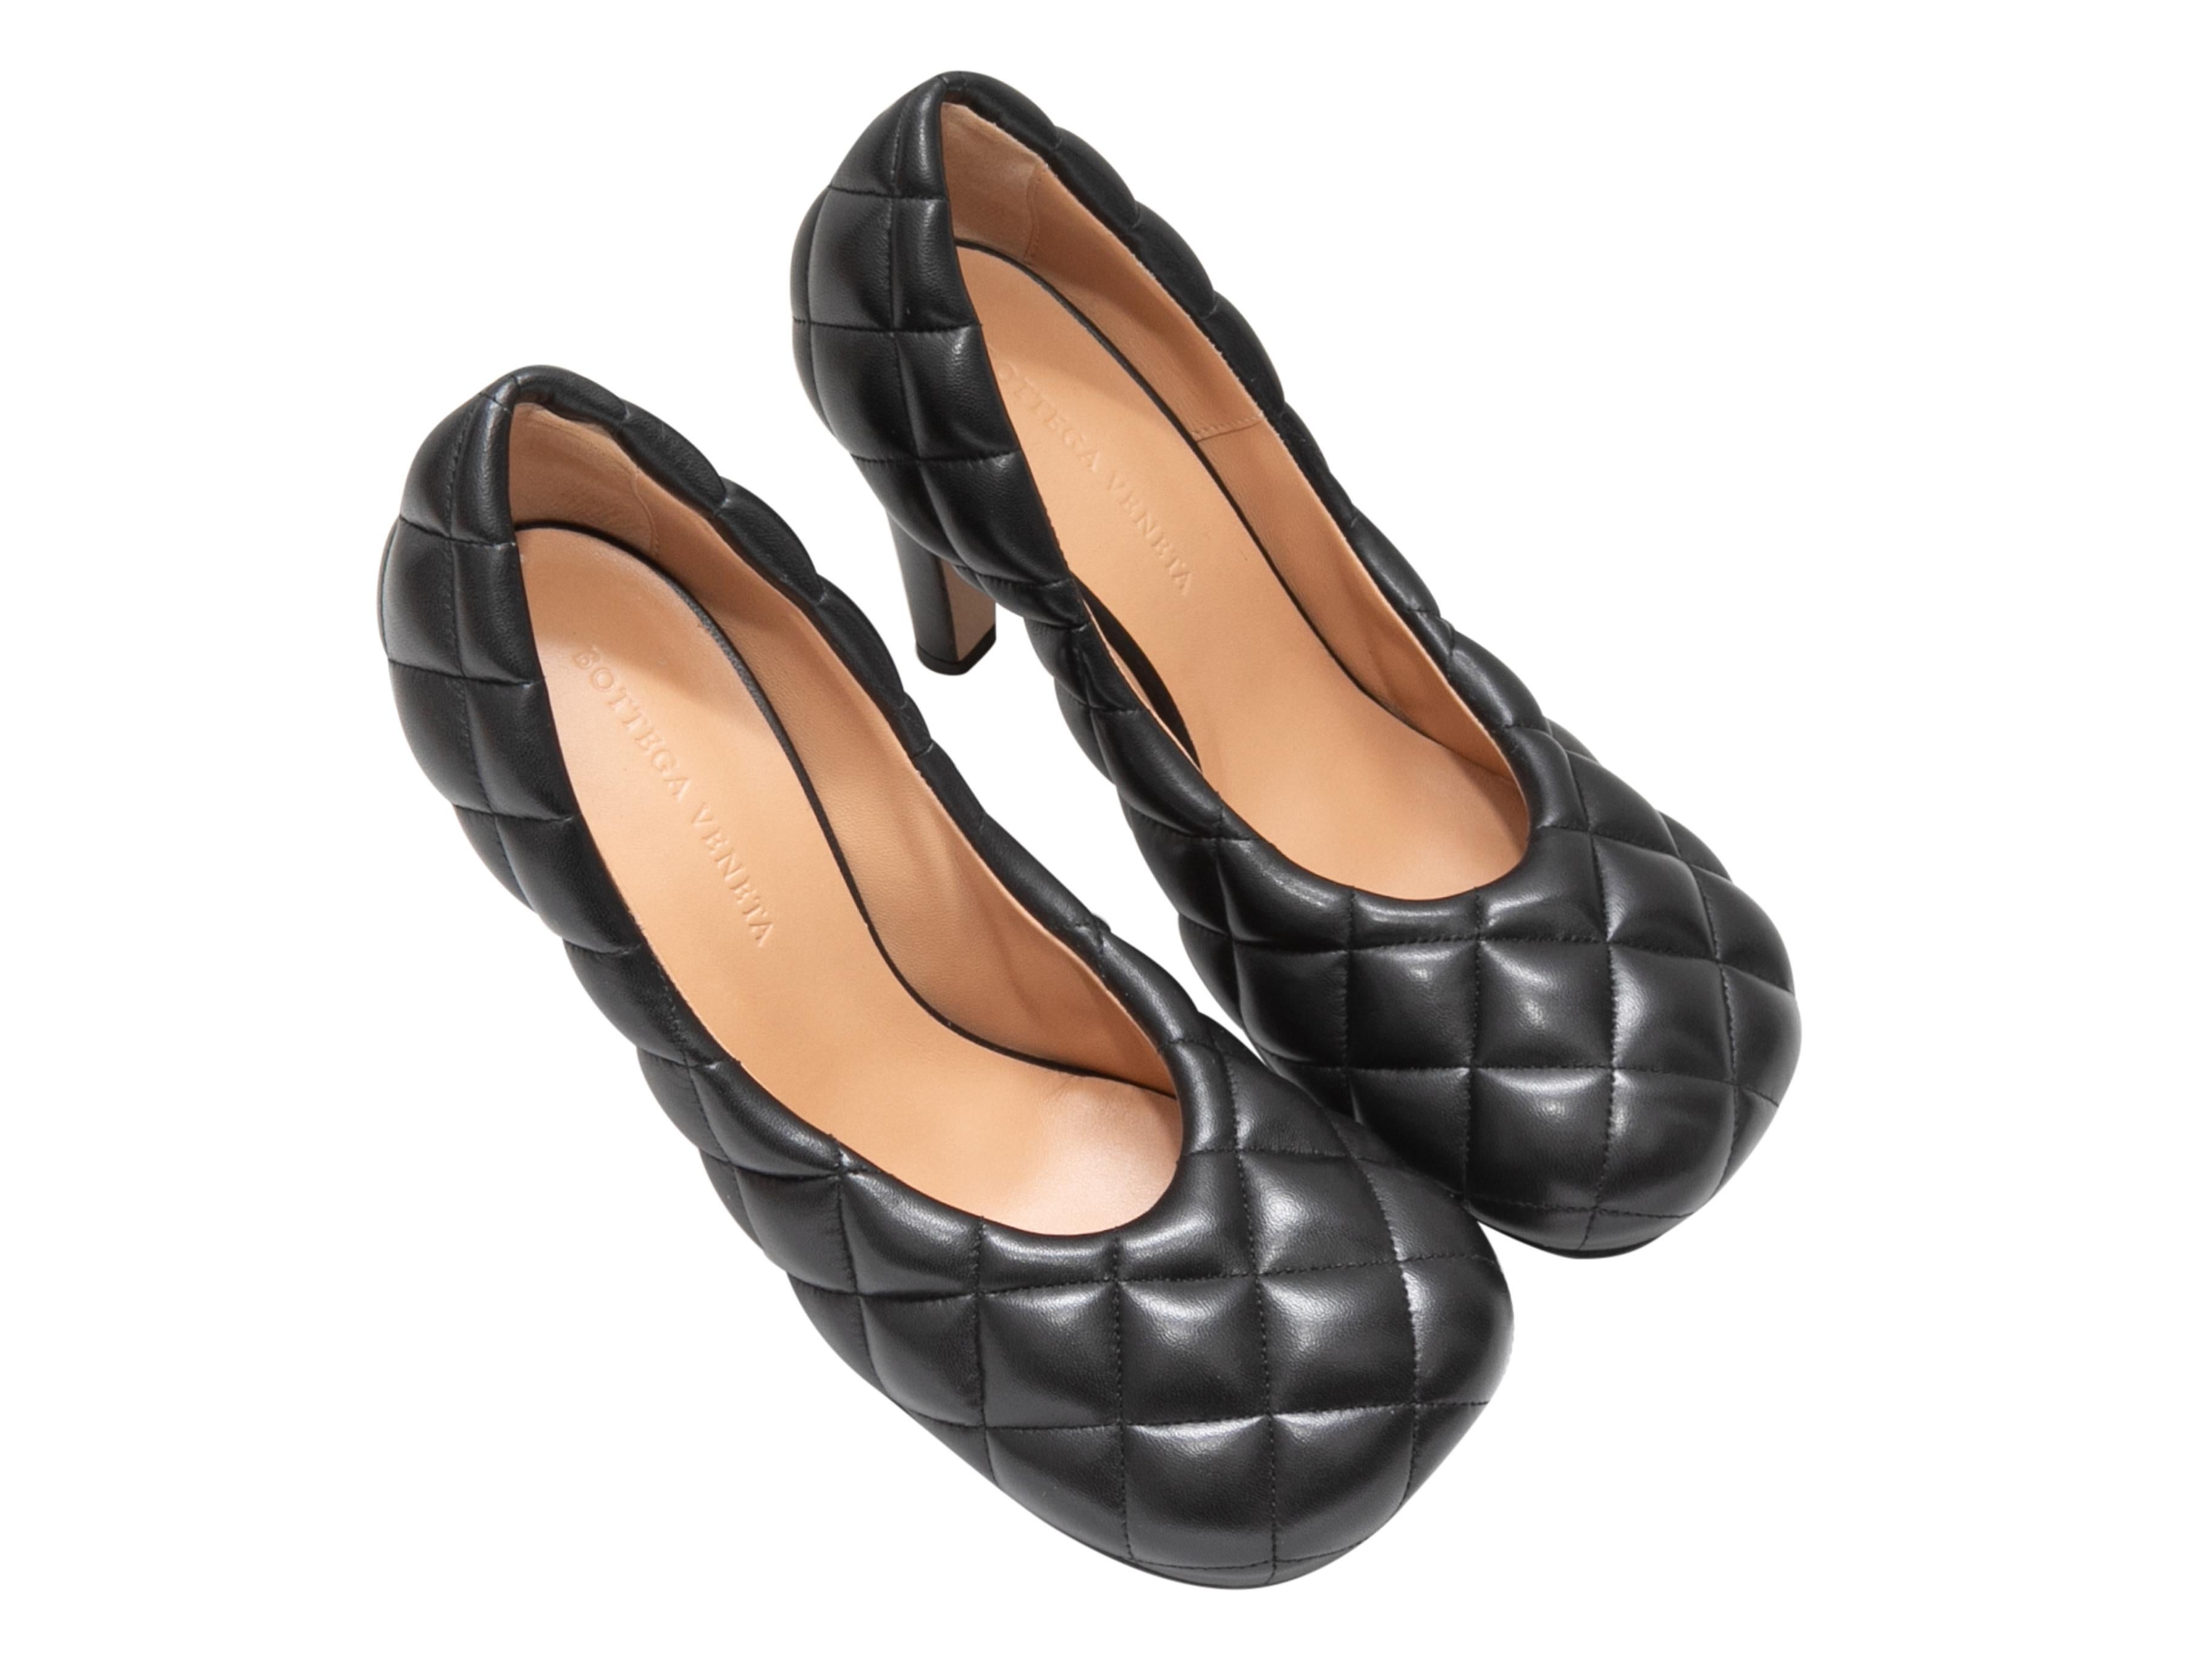 Black quilted matelasse leather Dream pumps by Bottega Veneta. 3.5